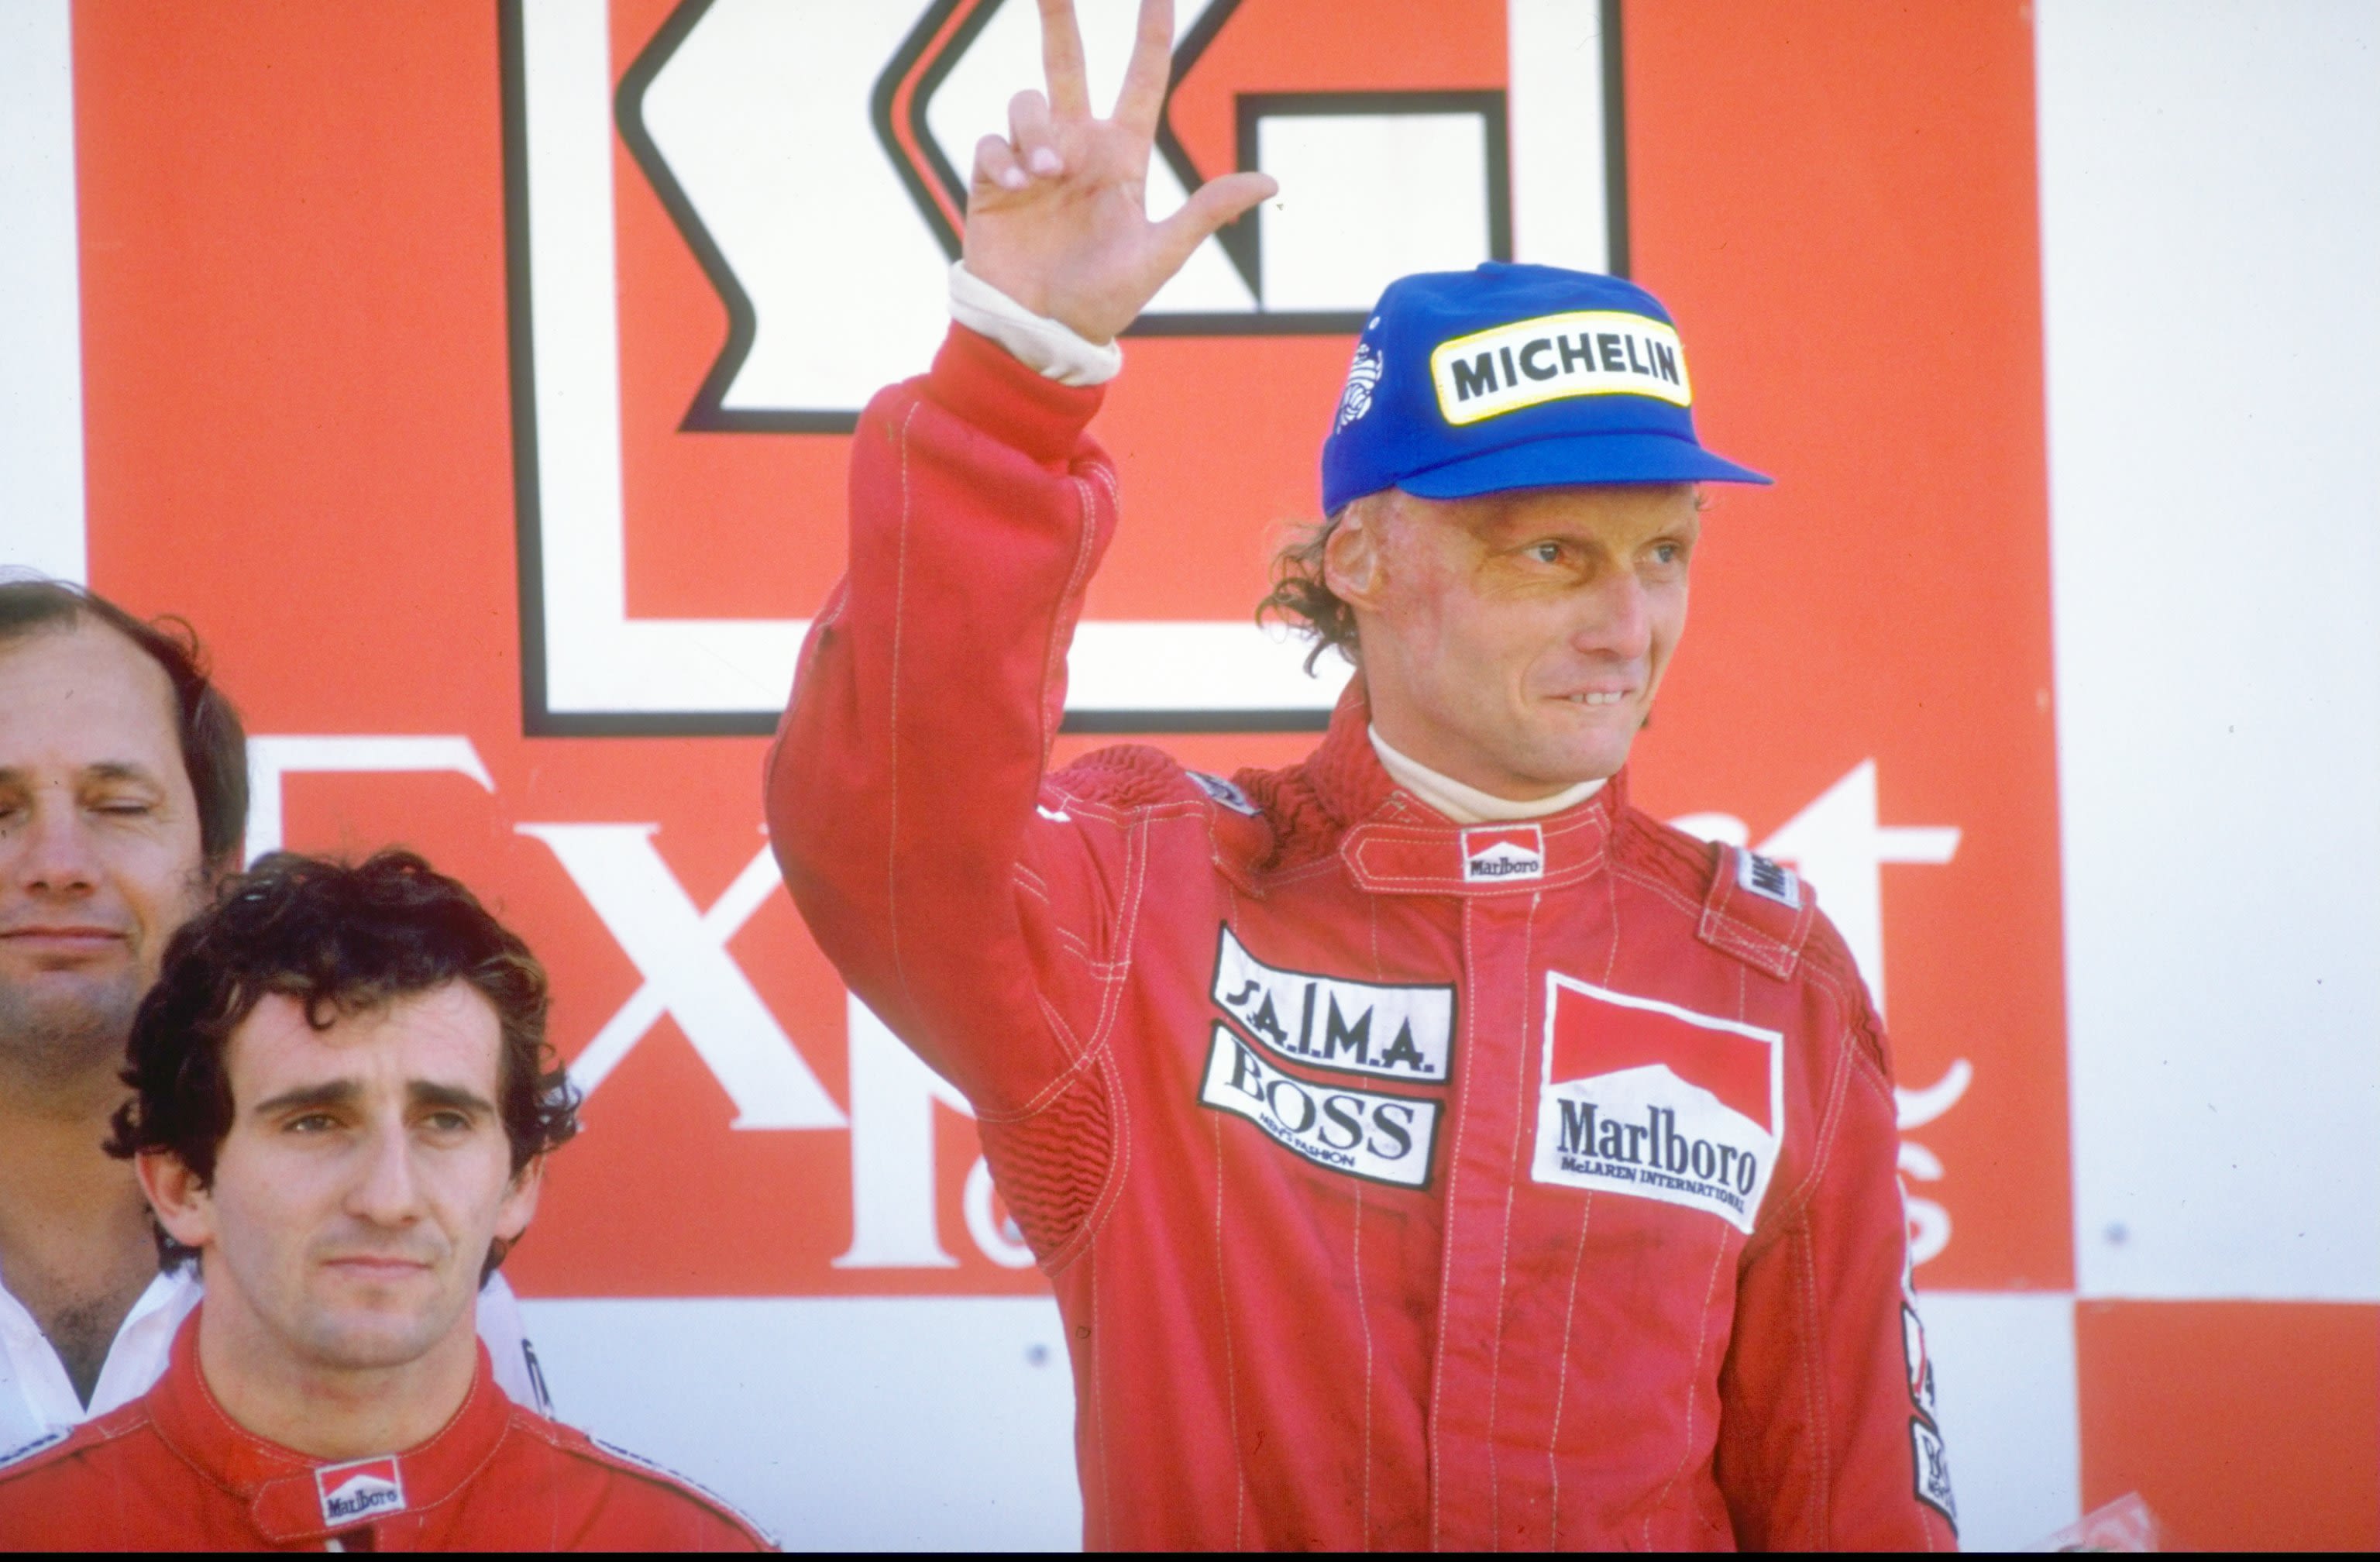 Niki Lauda's helmet from 1976 German GP crash goes up for auction